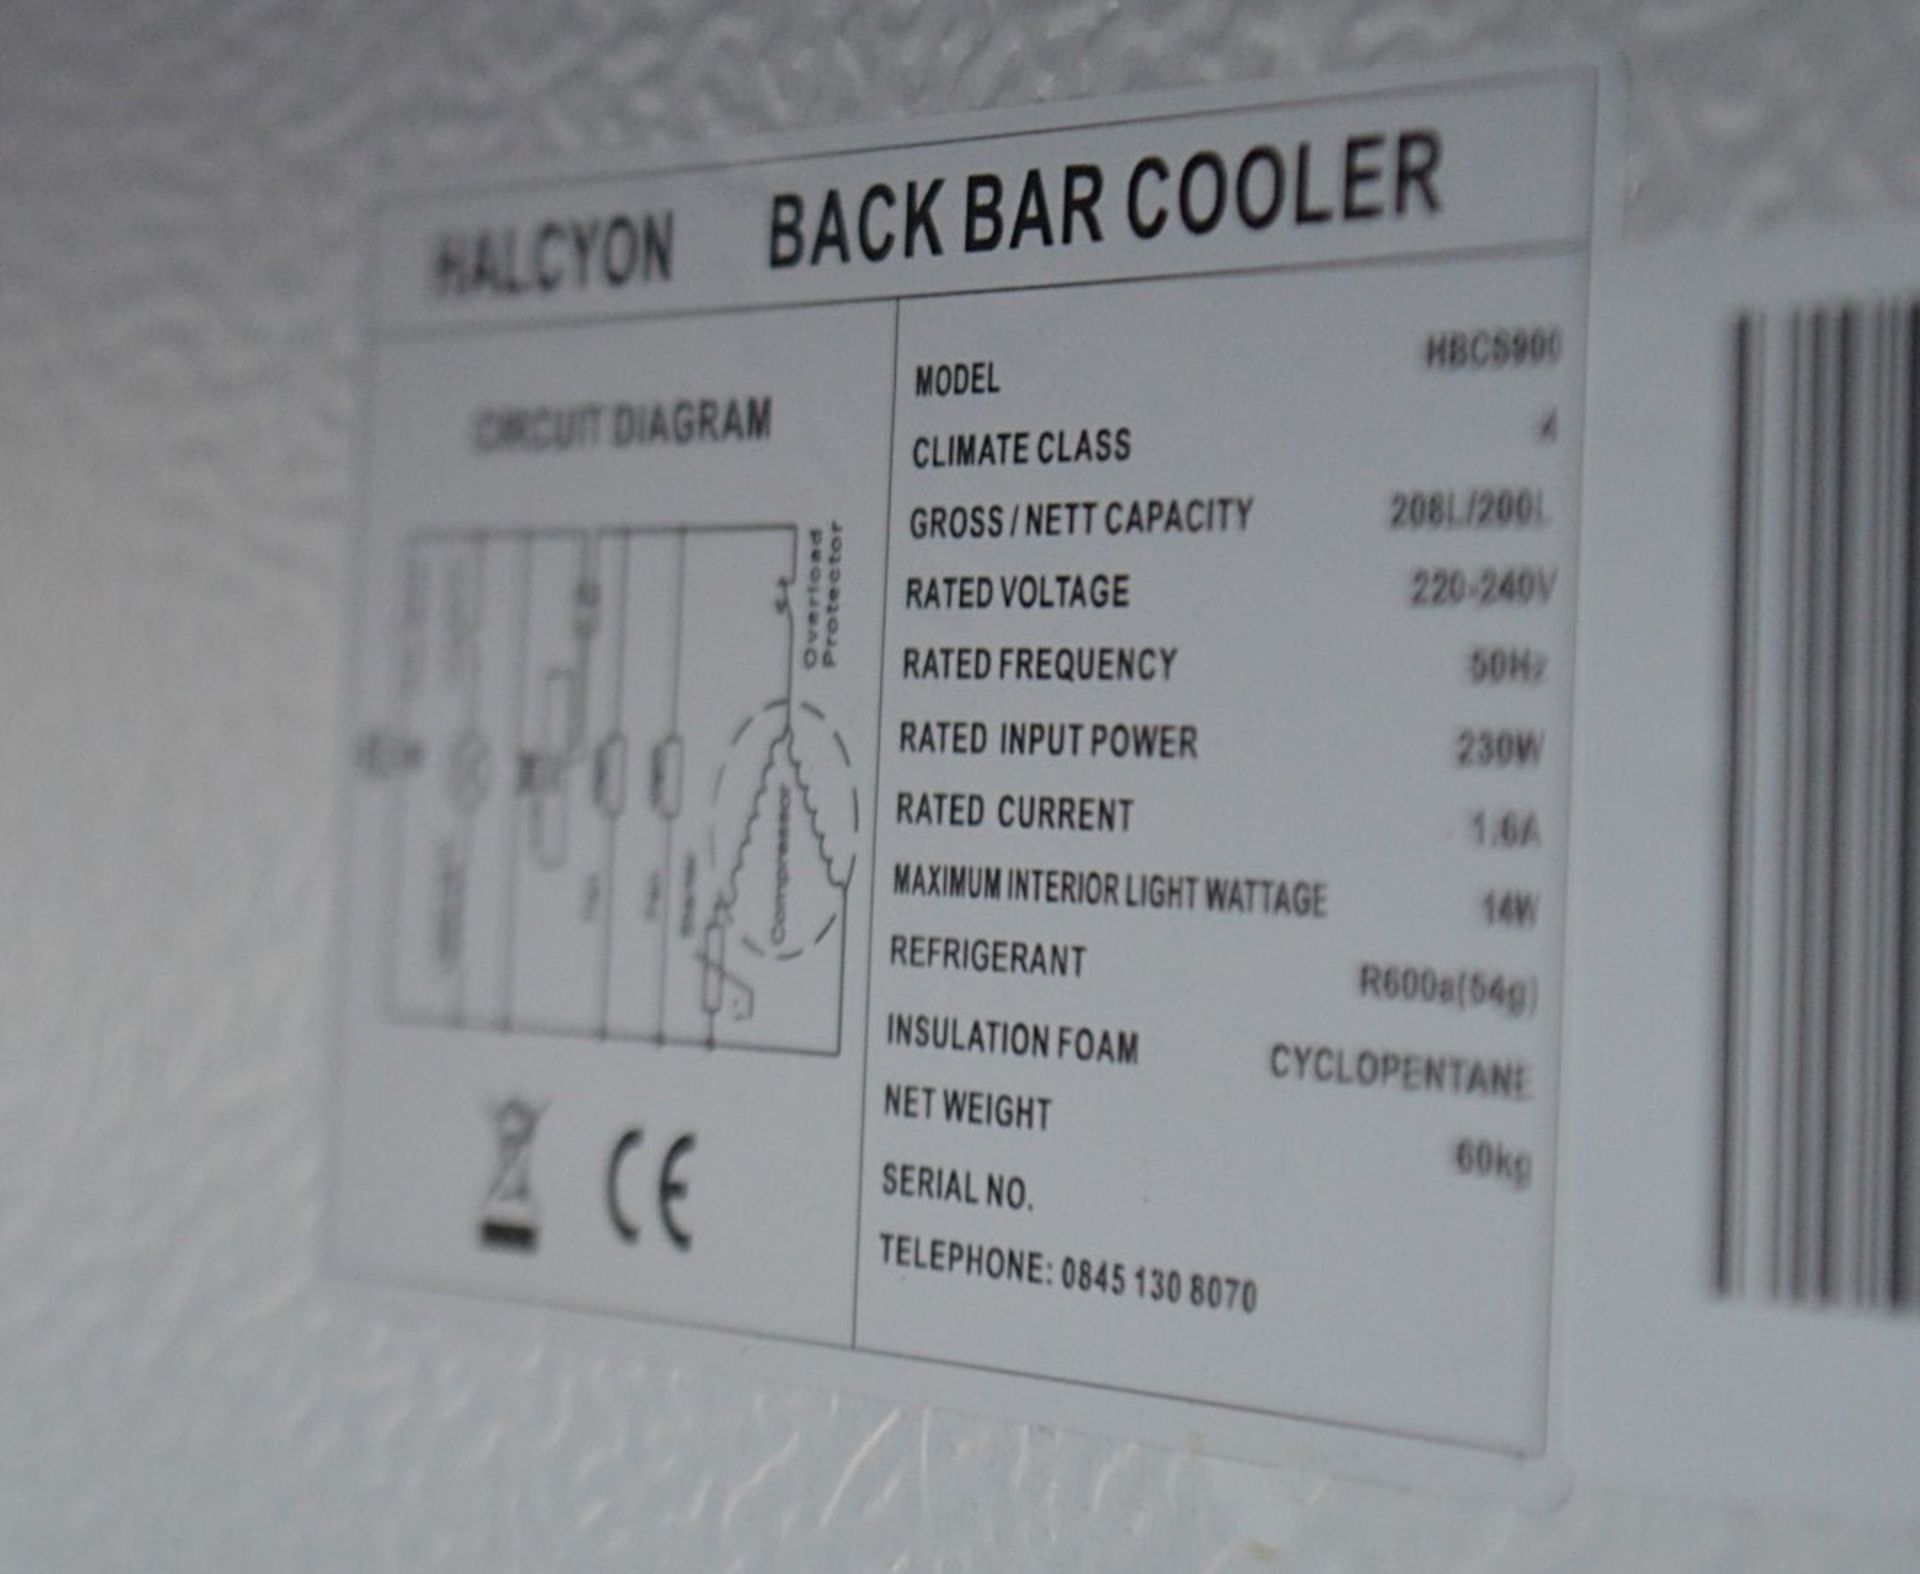 1 x HALCYON Commercial Sliding 2-Door Back Bar Cooler - Model: HBCS900 - Original RRP £720.00 - Image 4 of 8